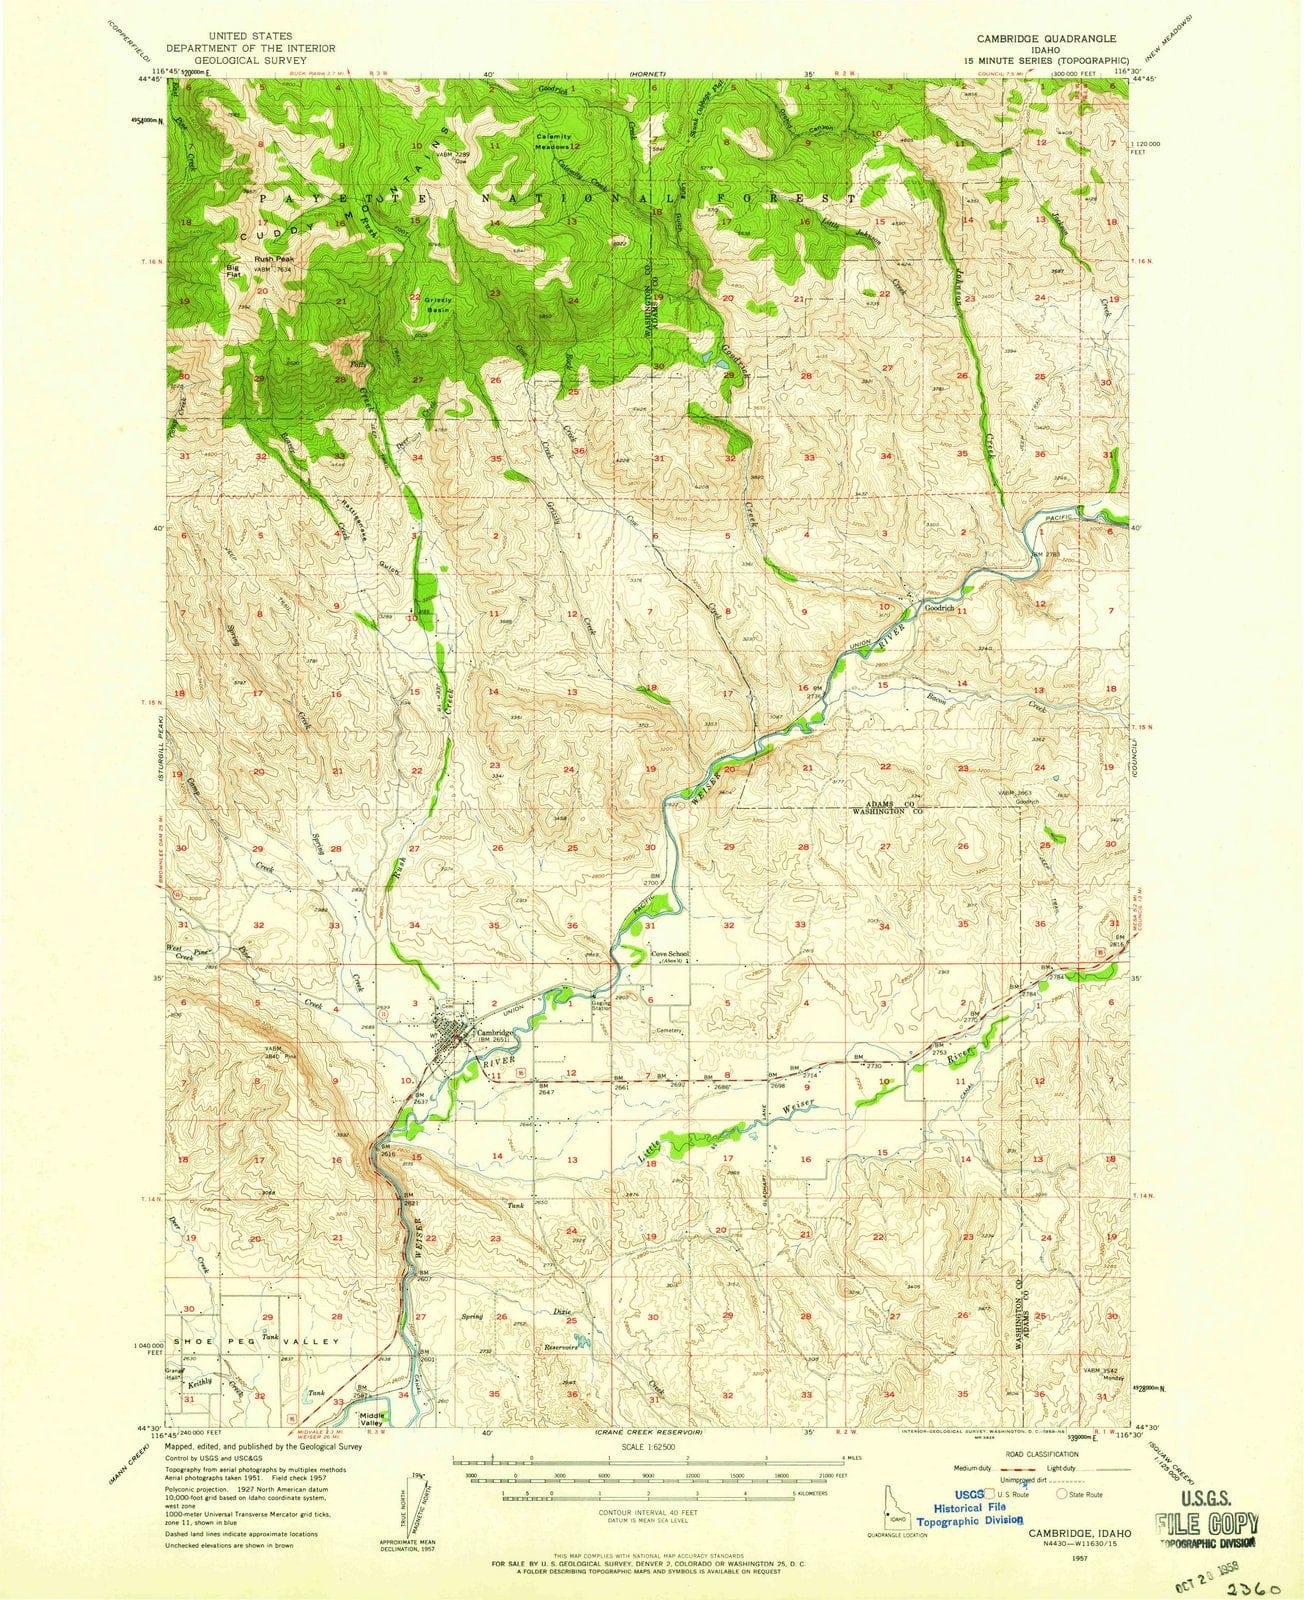 1957 Cambridge, ID - Idaho - USGS Topographic Map